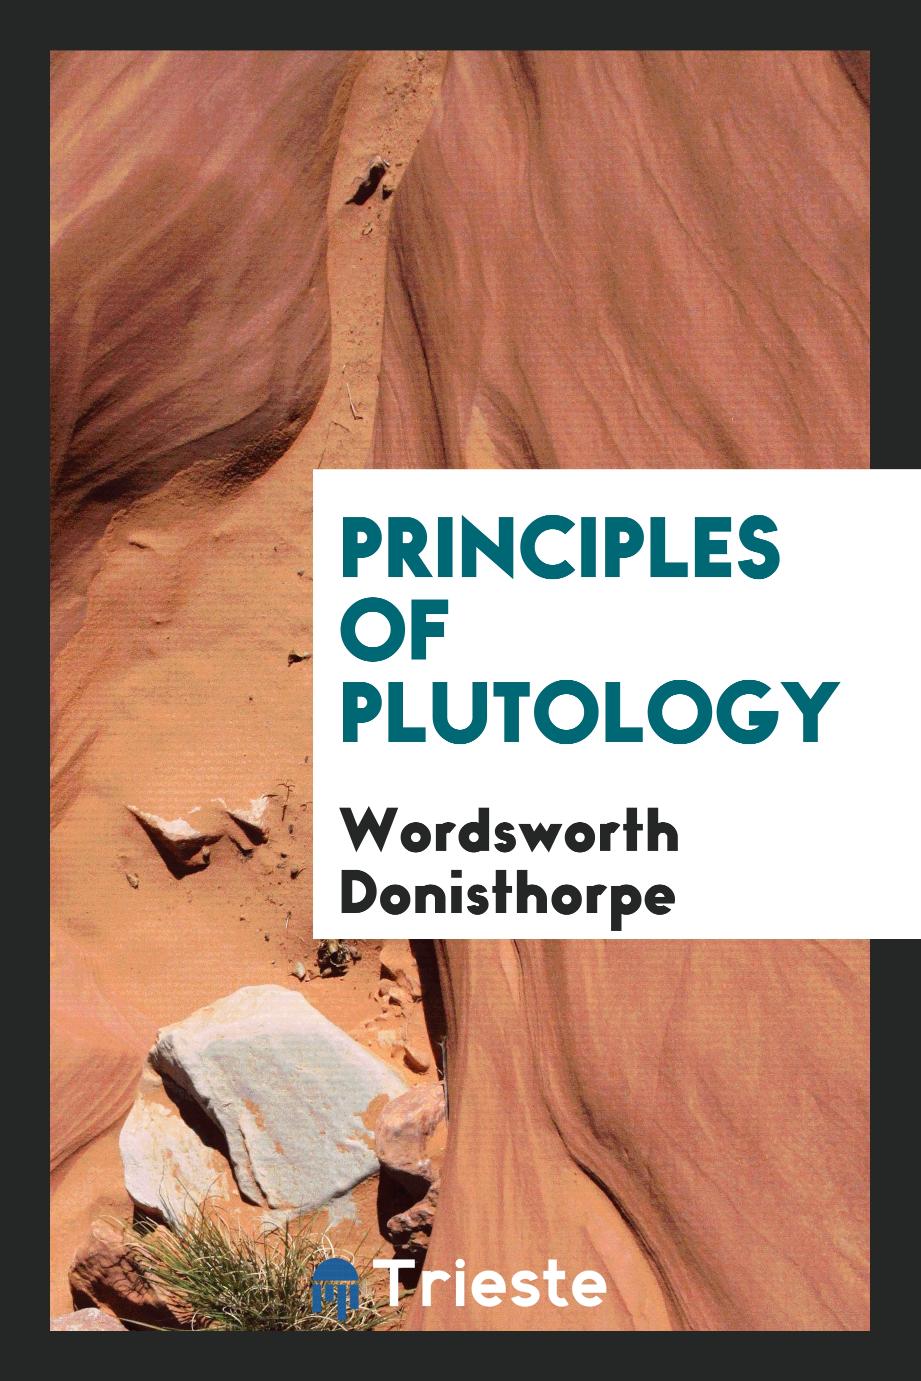 Principles of plutology